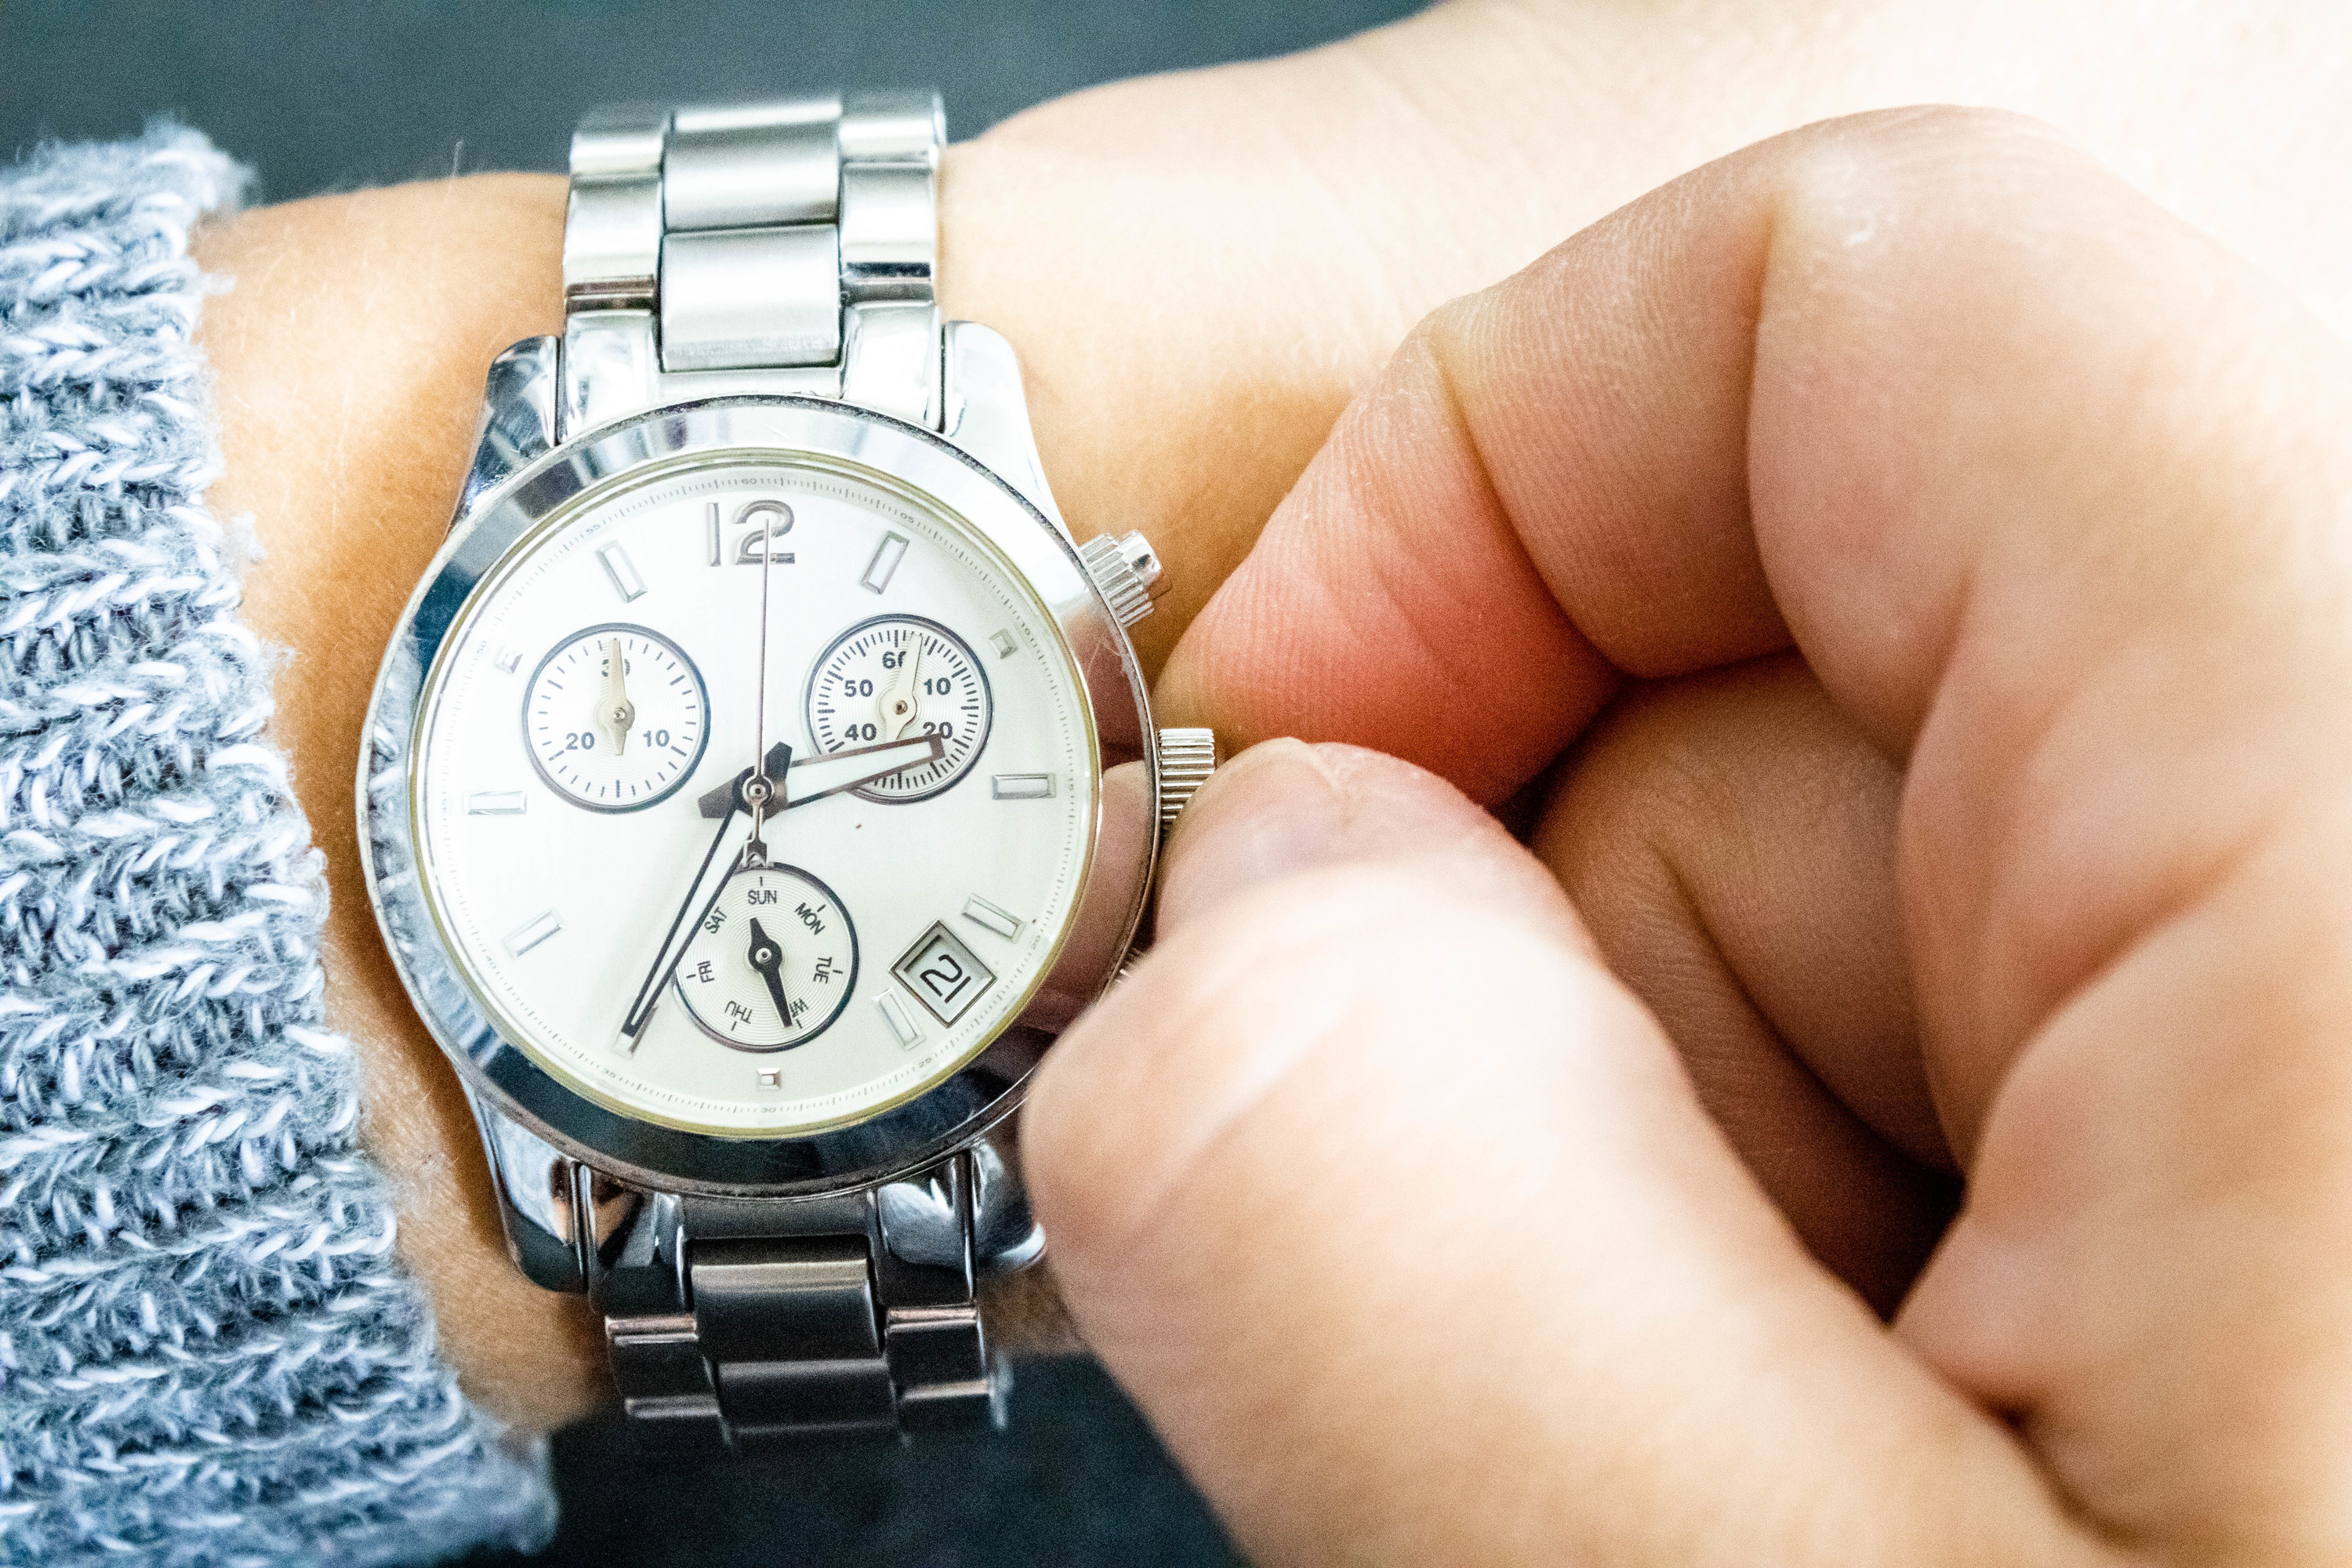 person sets their wrist watch